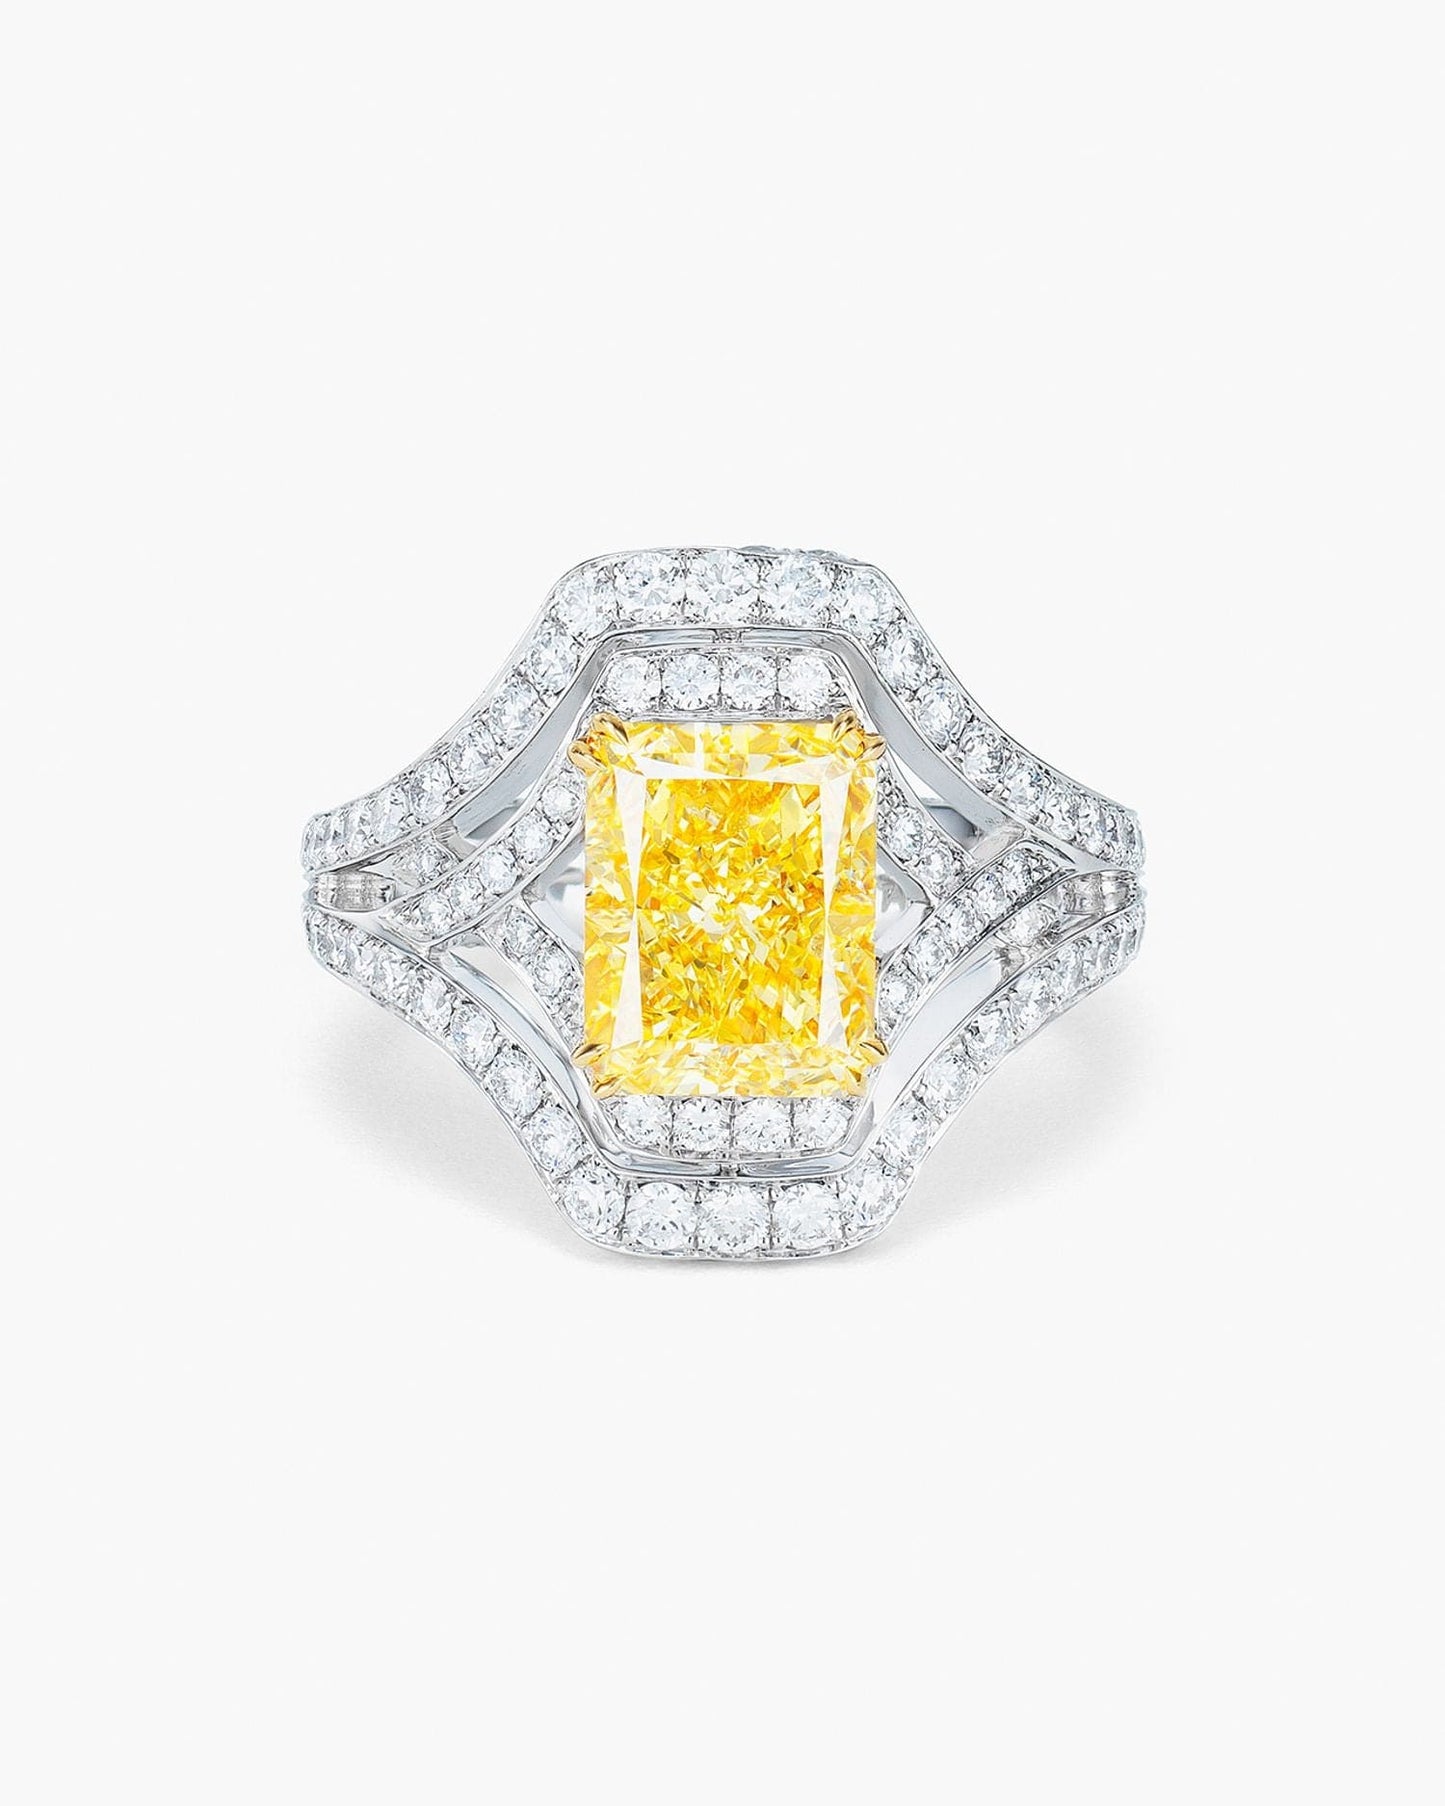 3.06 carat Radiant Cut Yellow and White Diamond Ring